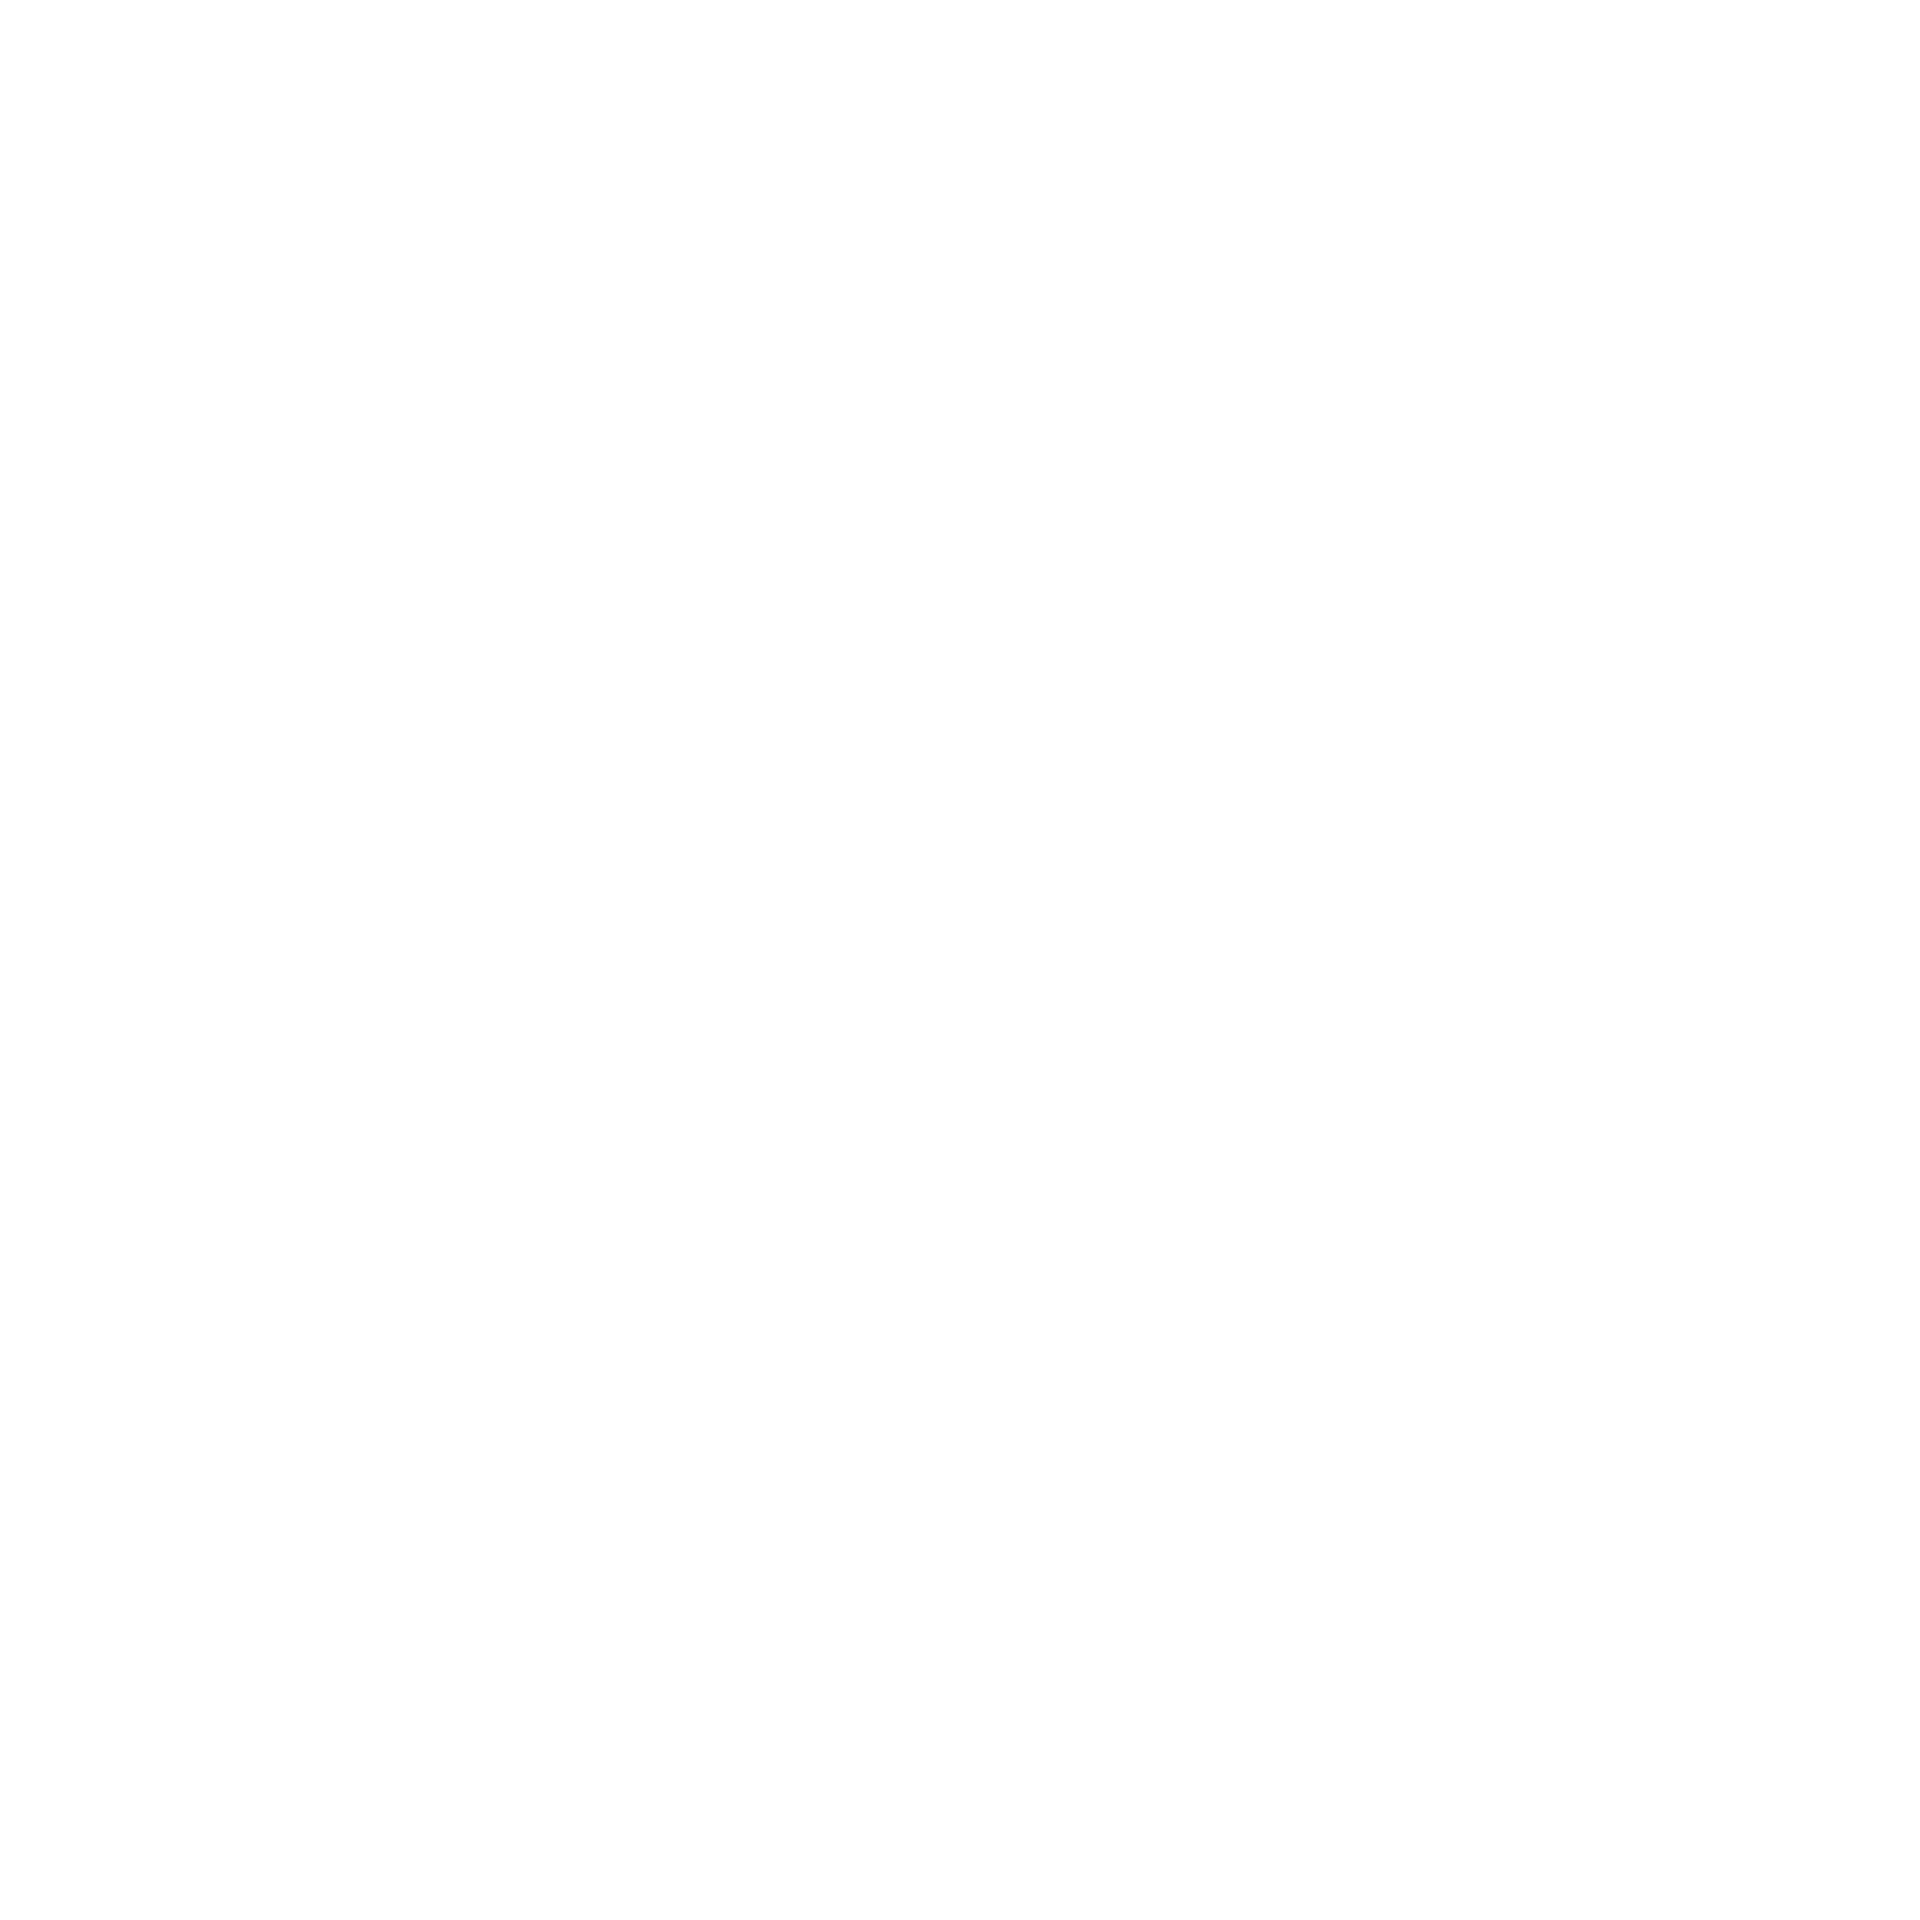 Athena logo graphic